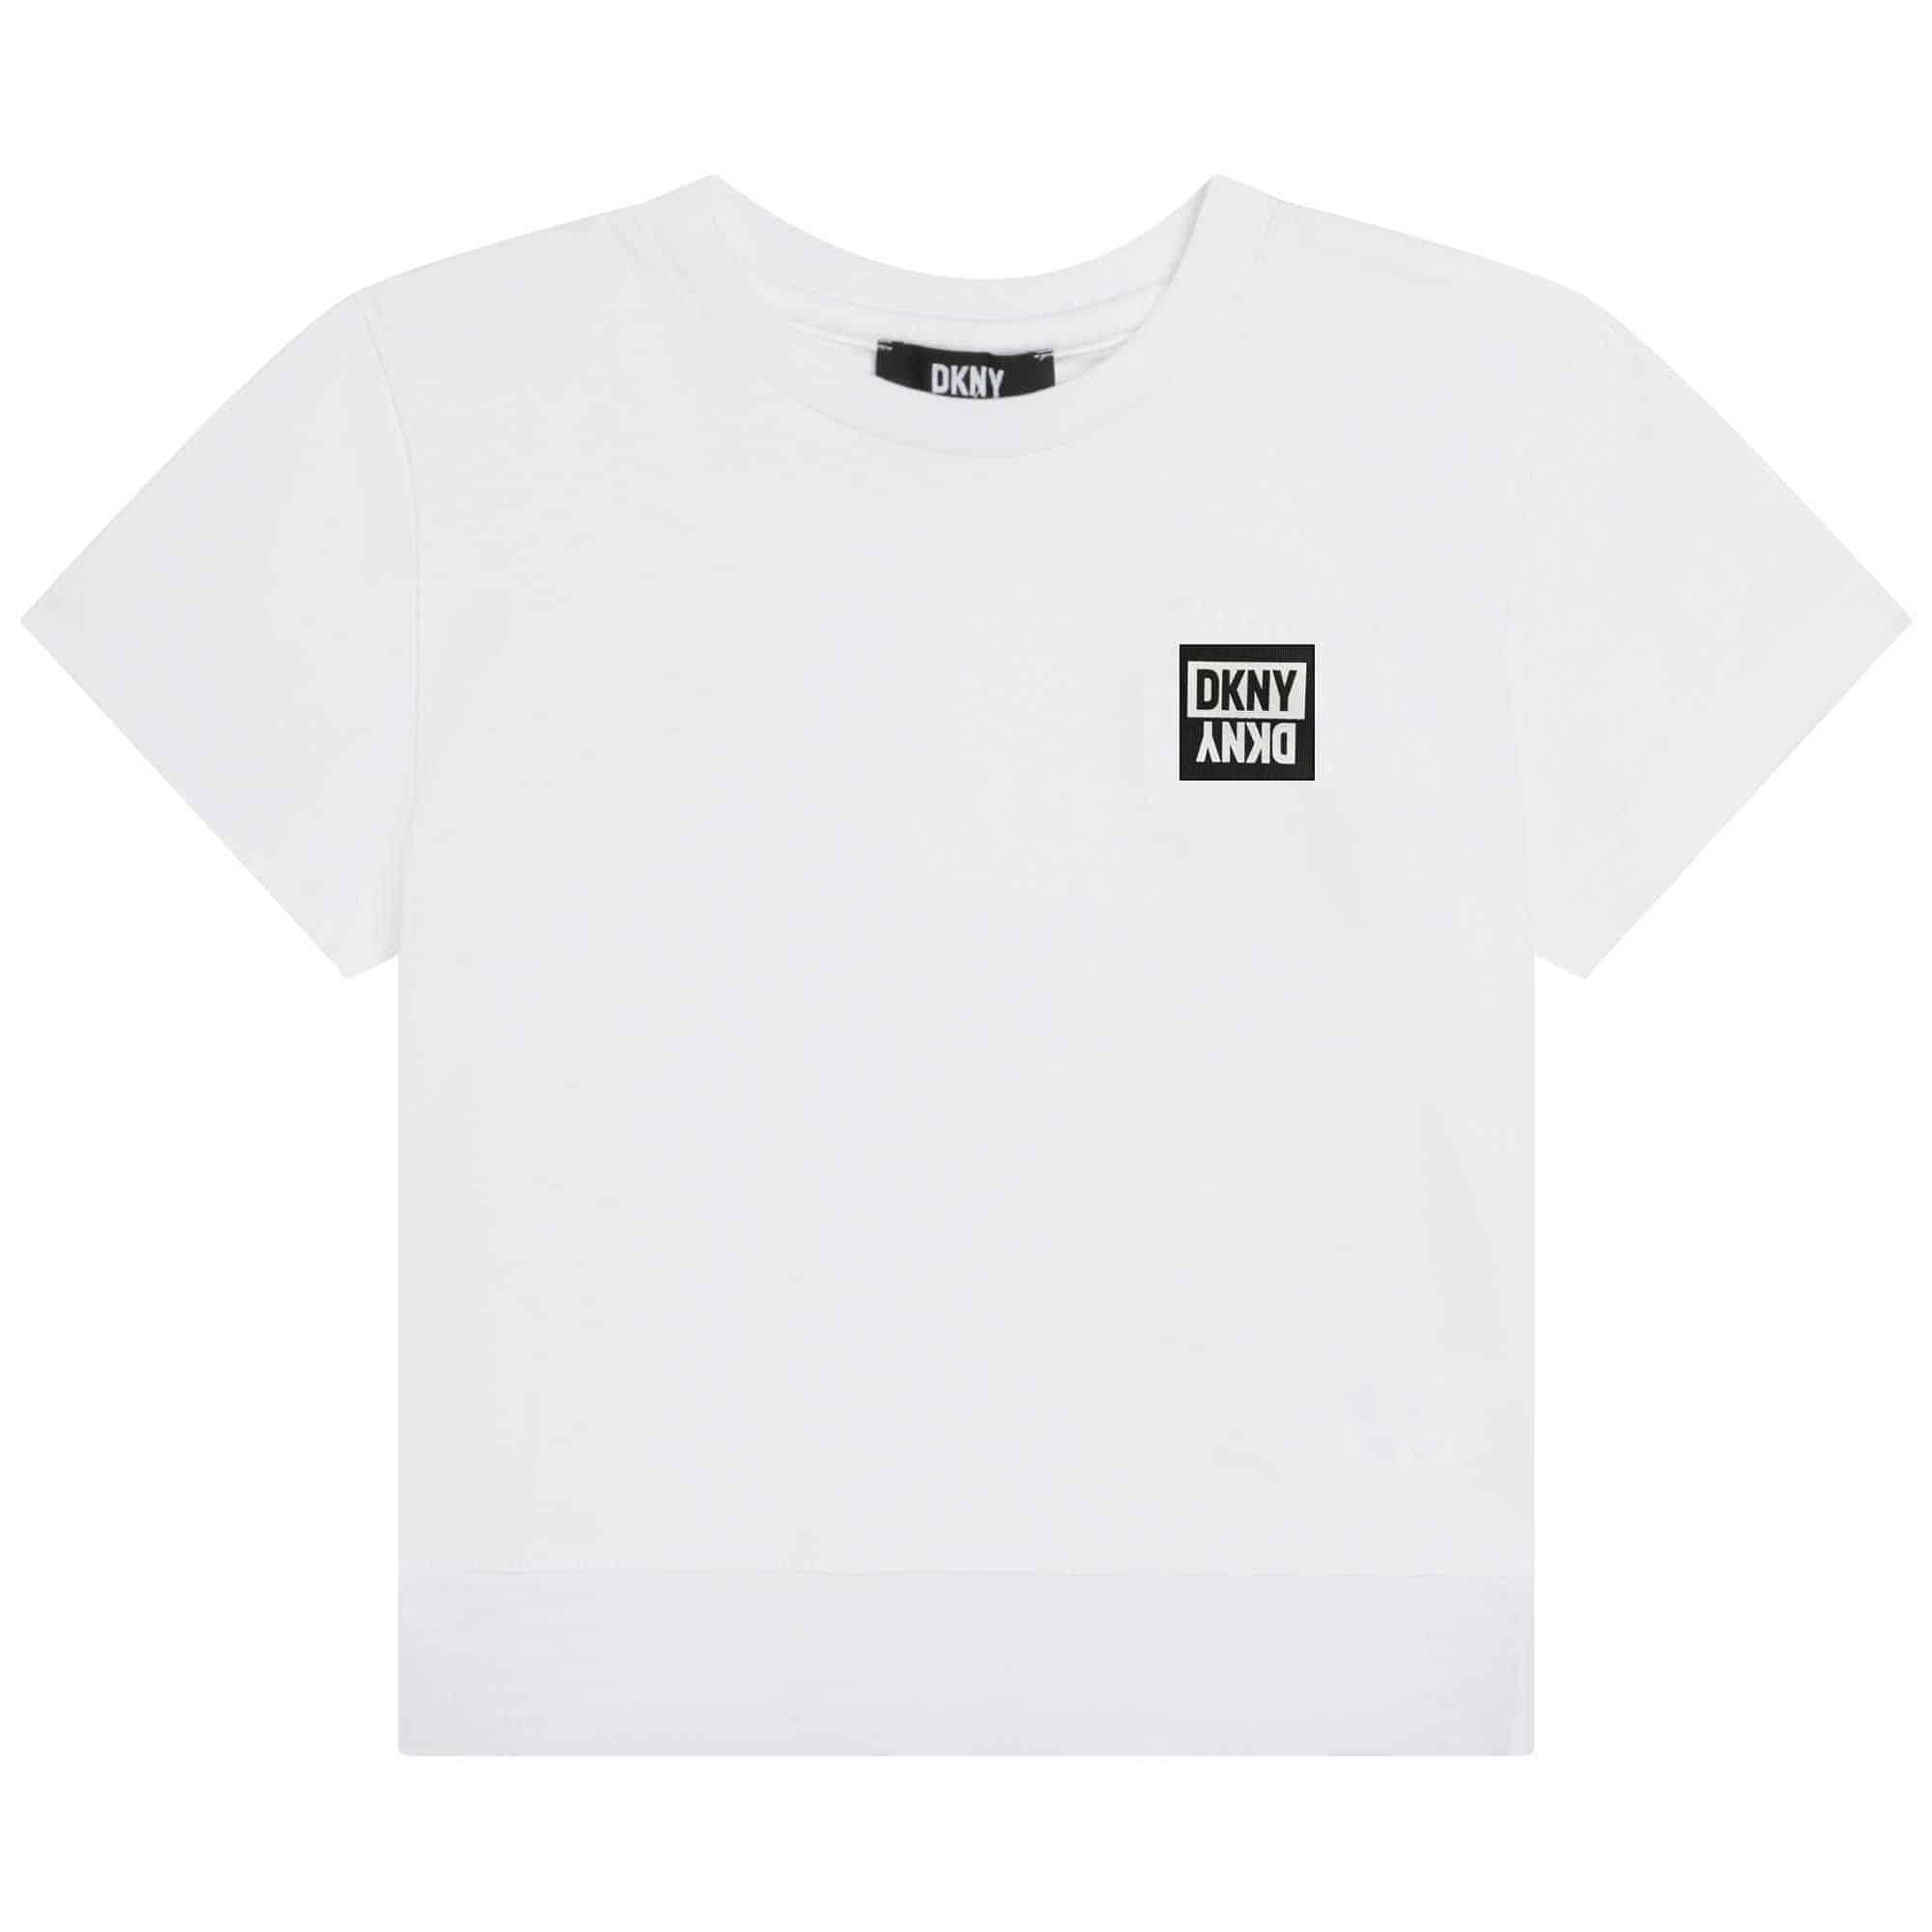 DKNY unisex white tshirt with black logo